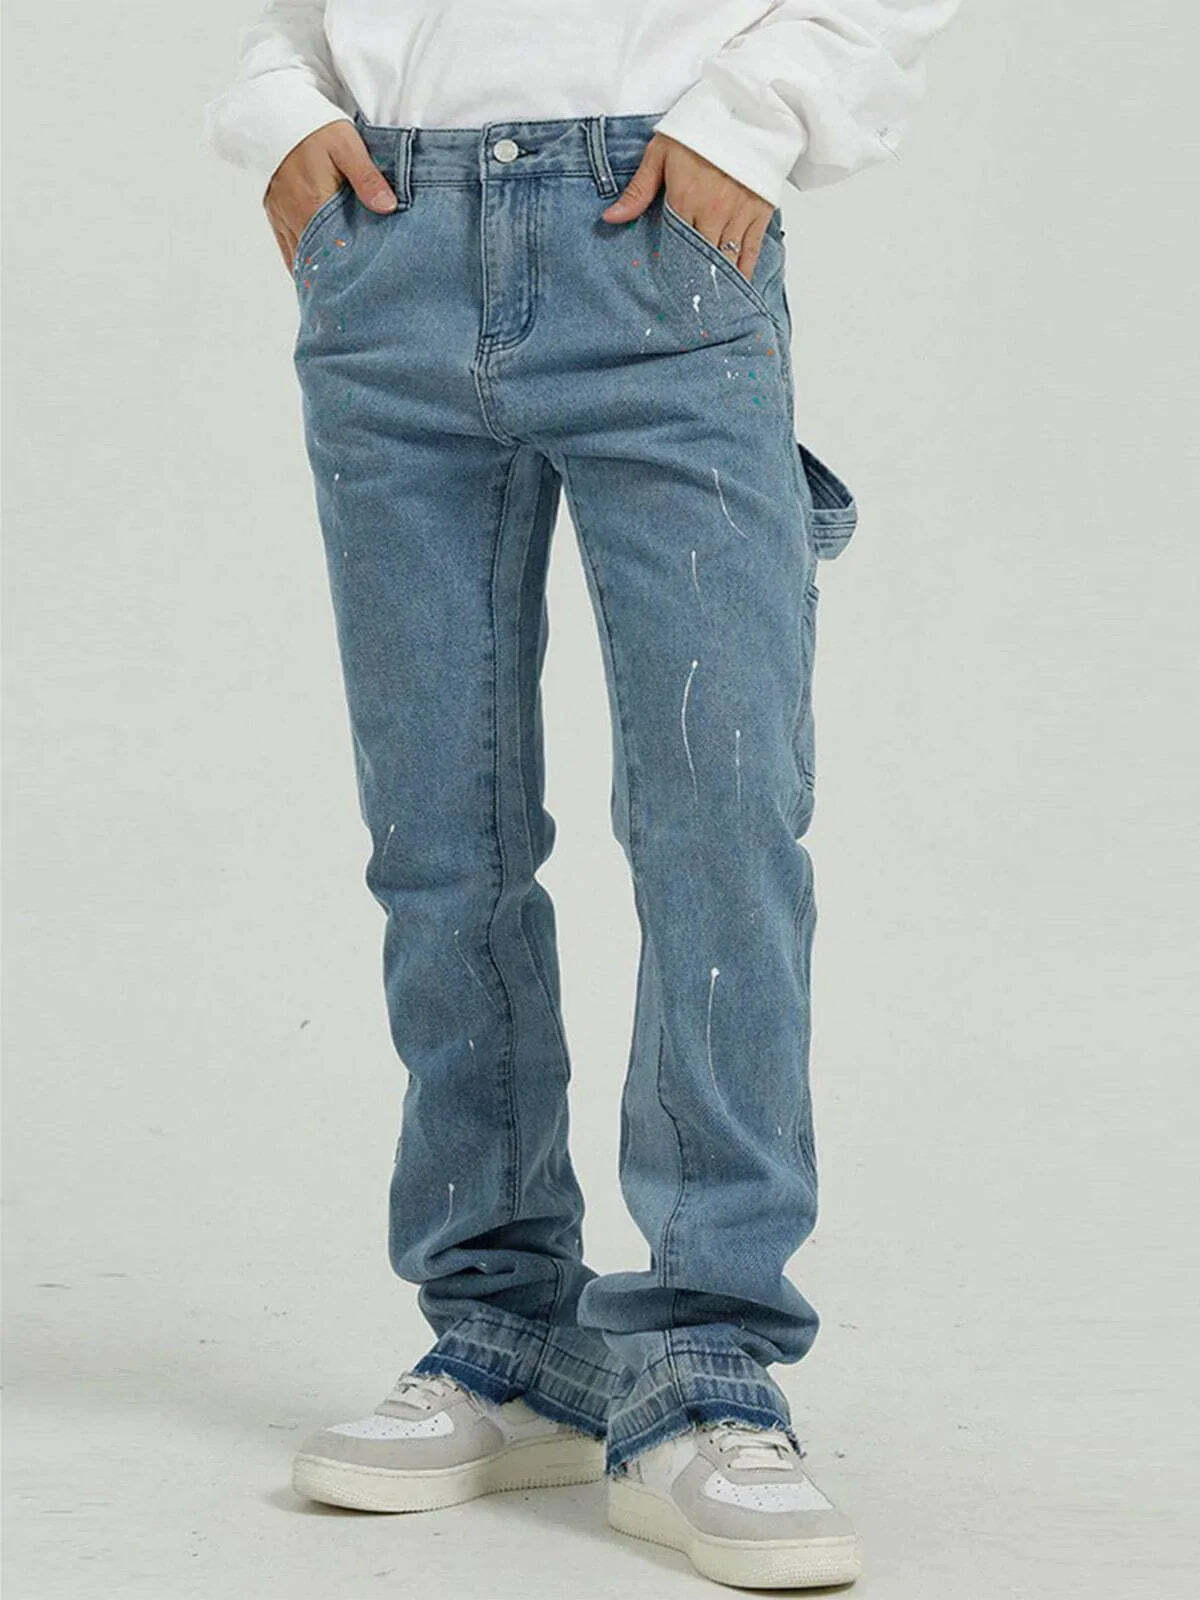 ink splash jeans edgy & vibrant streetwear 6345